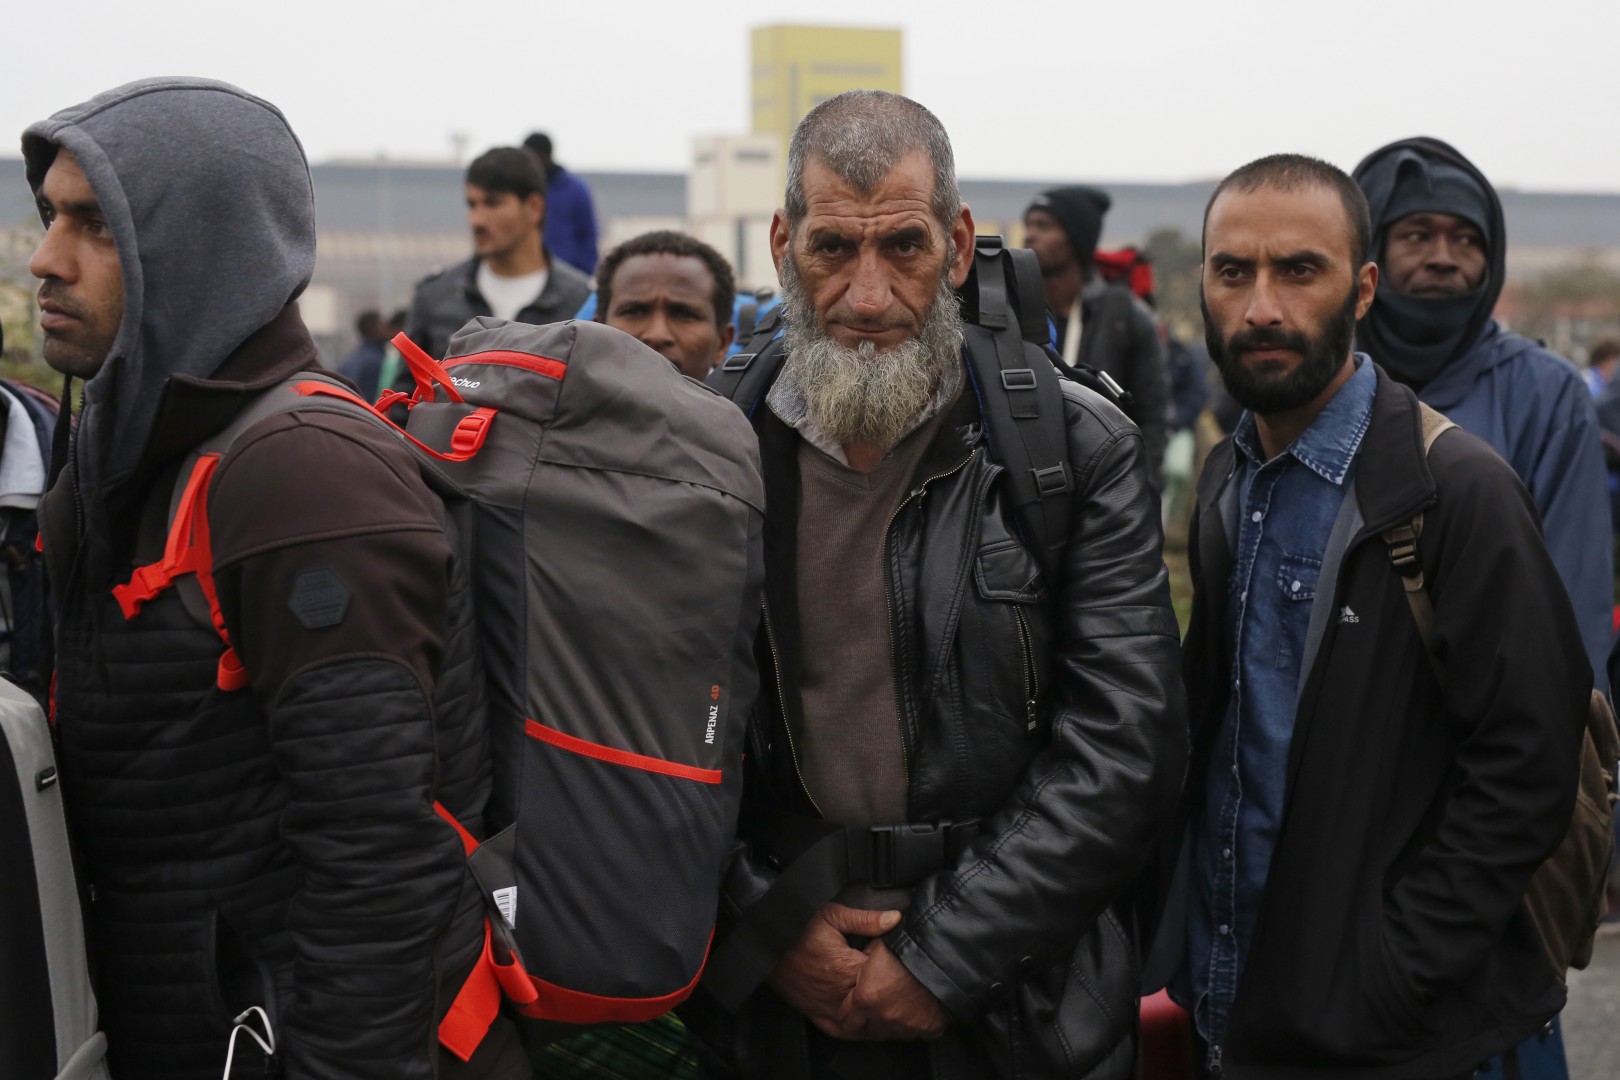 Magranti in begunci - Italija  Vir:Pixsell